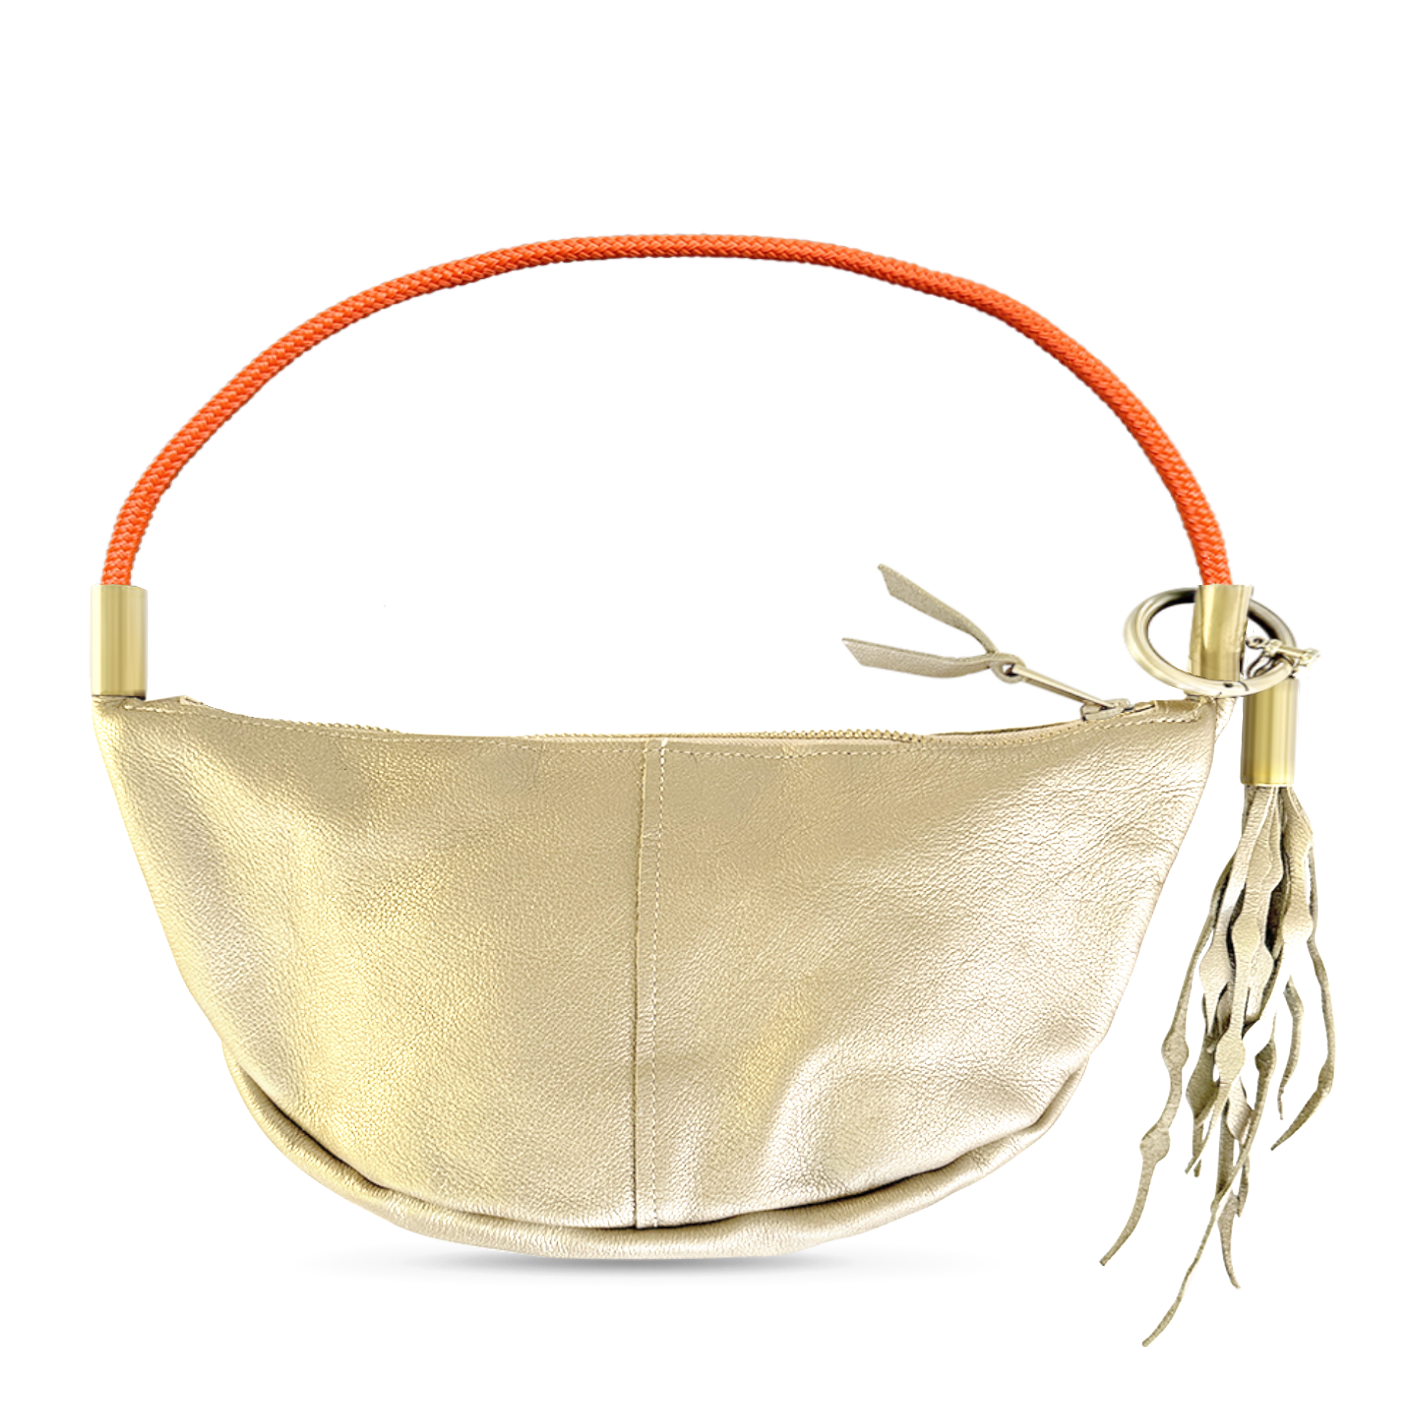 gold leather sling bag with neon orange dock line